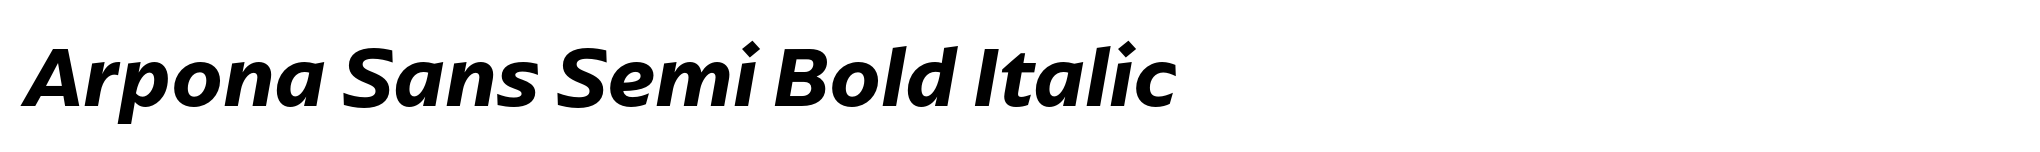 Arpona Sans Semi Bold Italic image